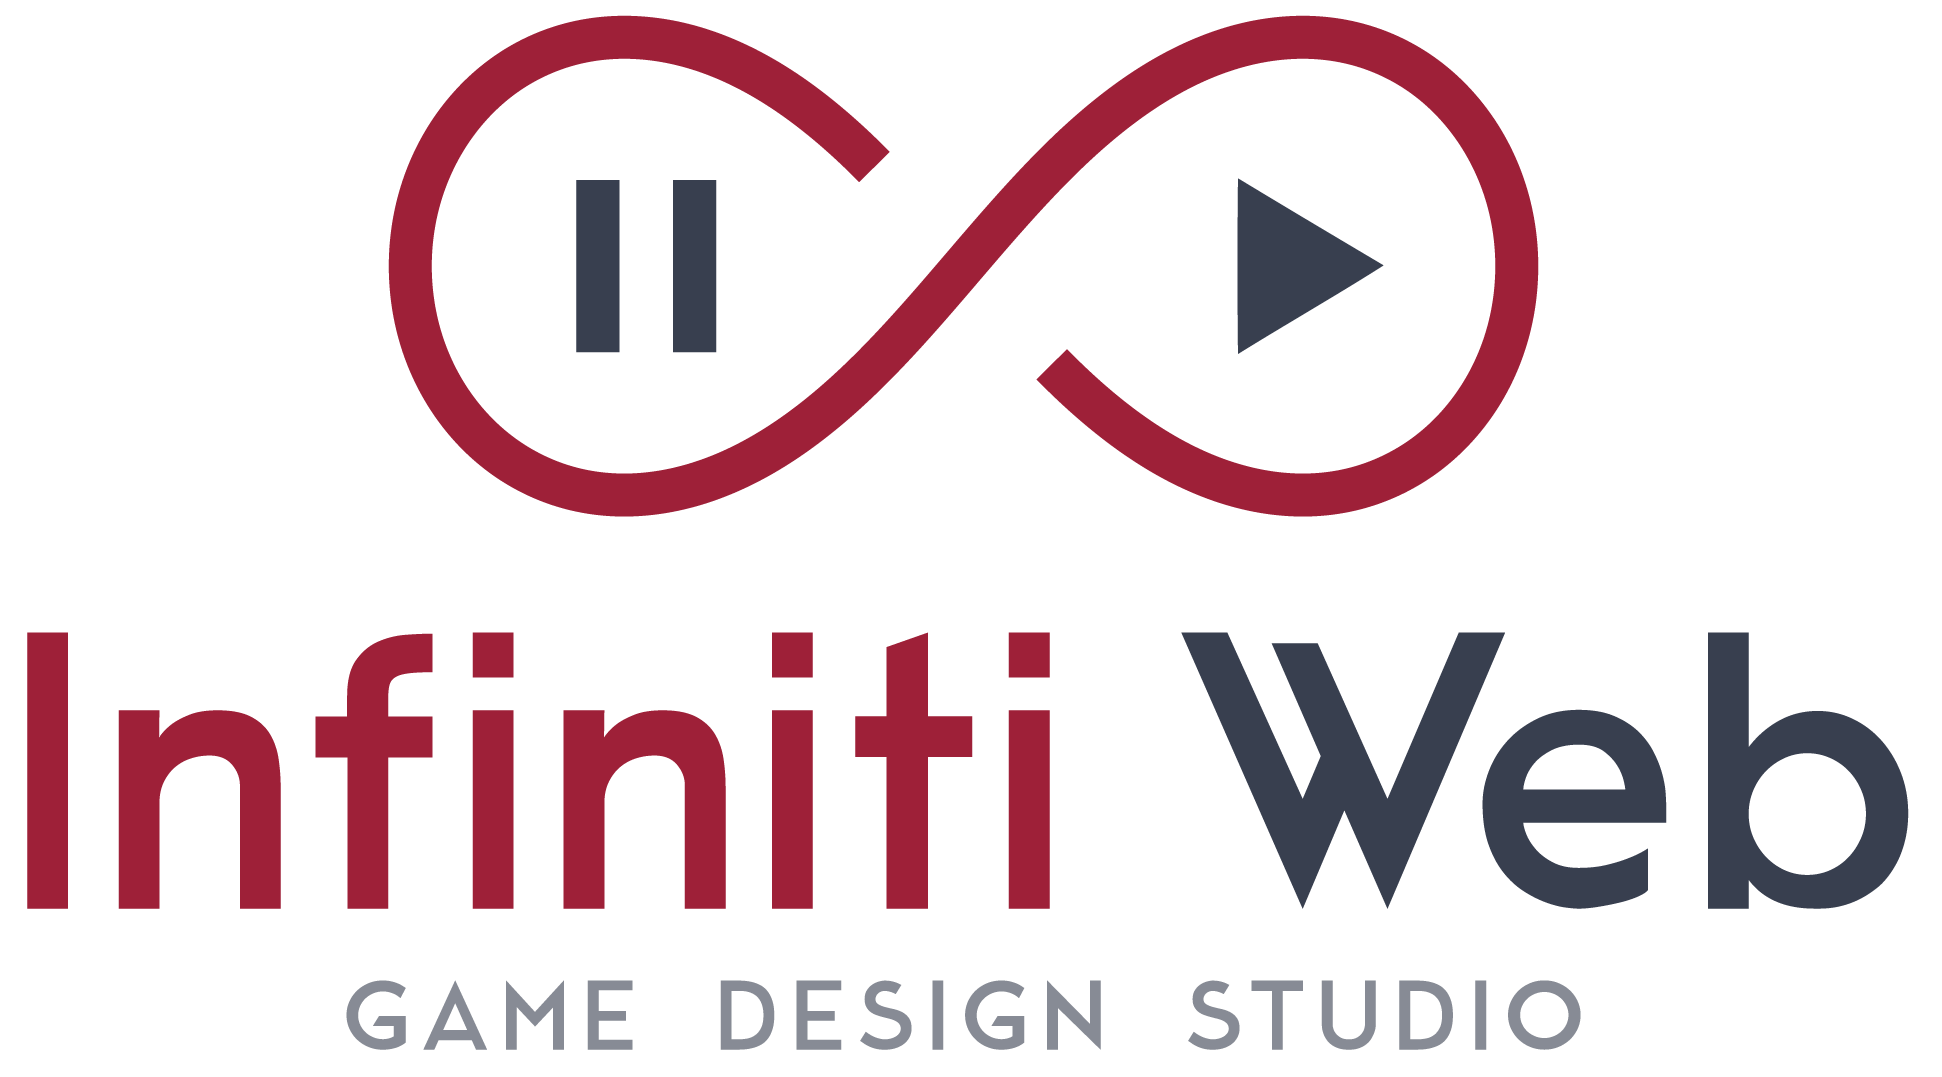 Логотип компании «Infinitiweb»